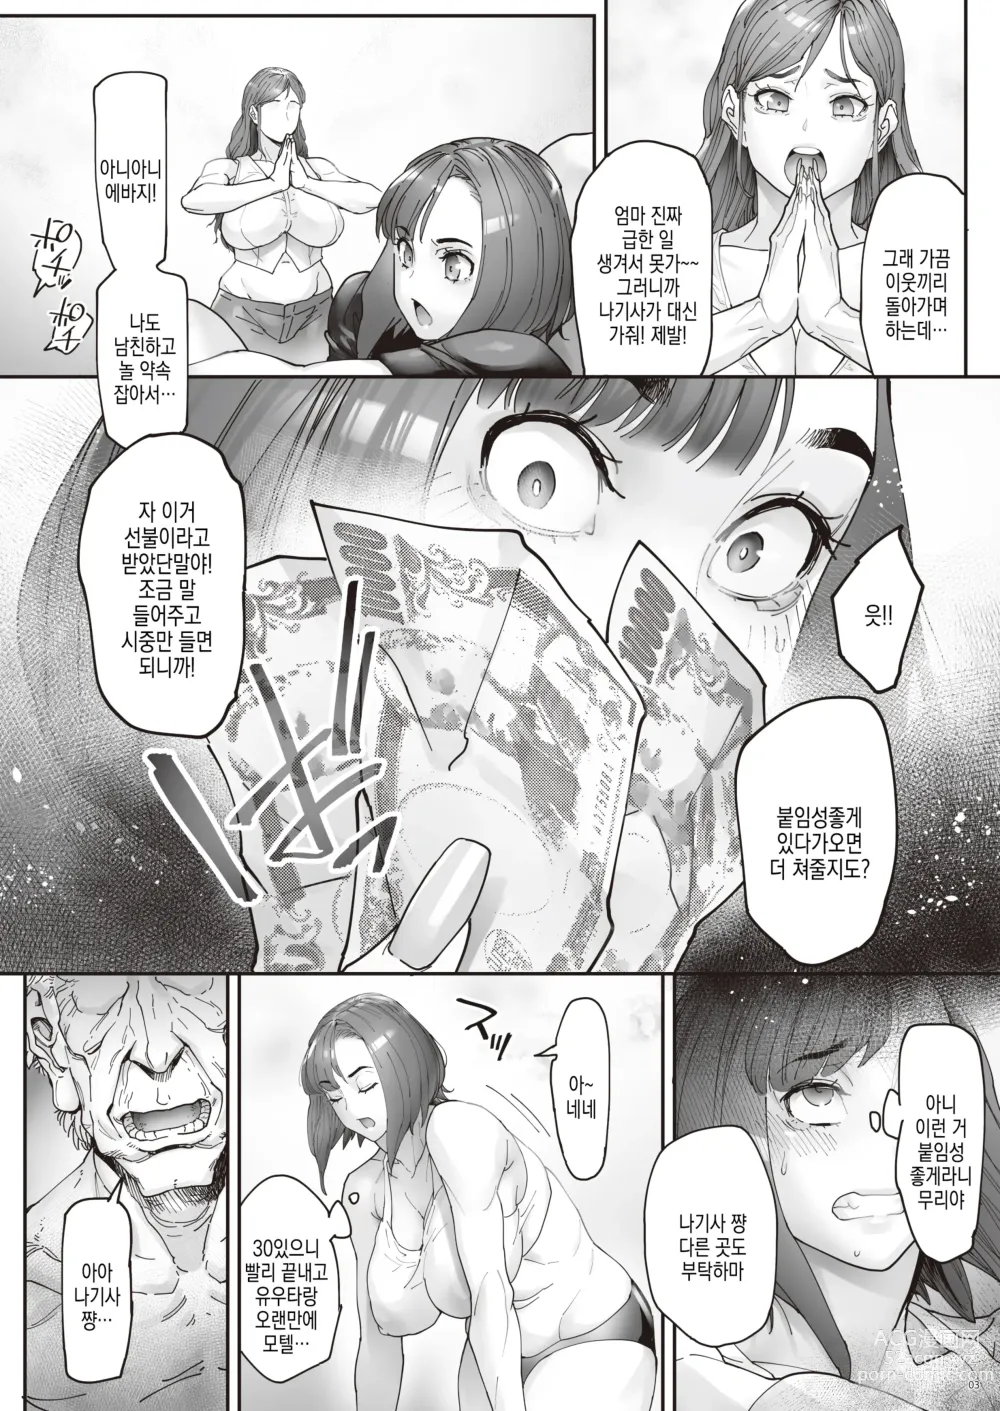 Page 5 of doujinshi 간병 알바로 노인의 억지스러운 요구와 돈 앞에서 치태를 비추는 JK